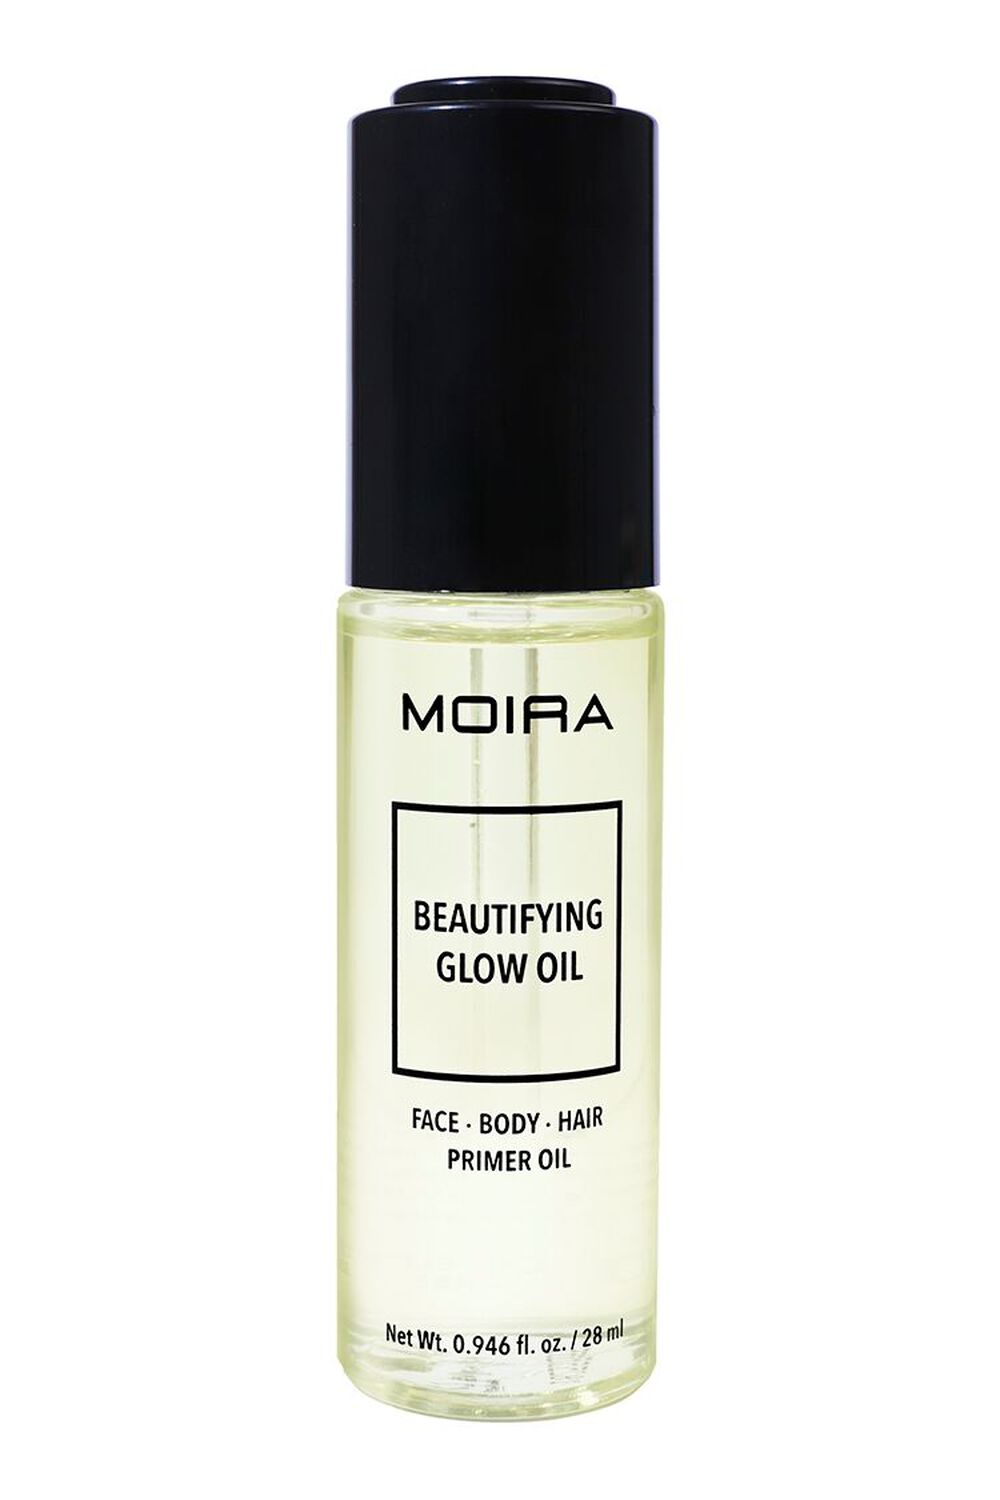 MOIRA Beautifying Glow Oil